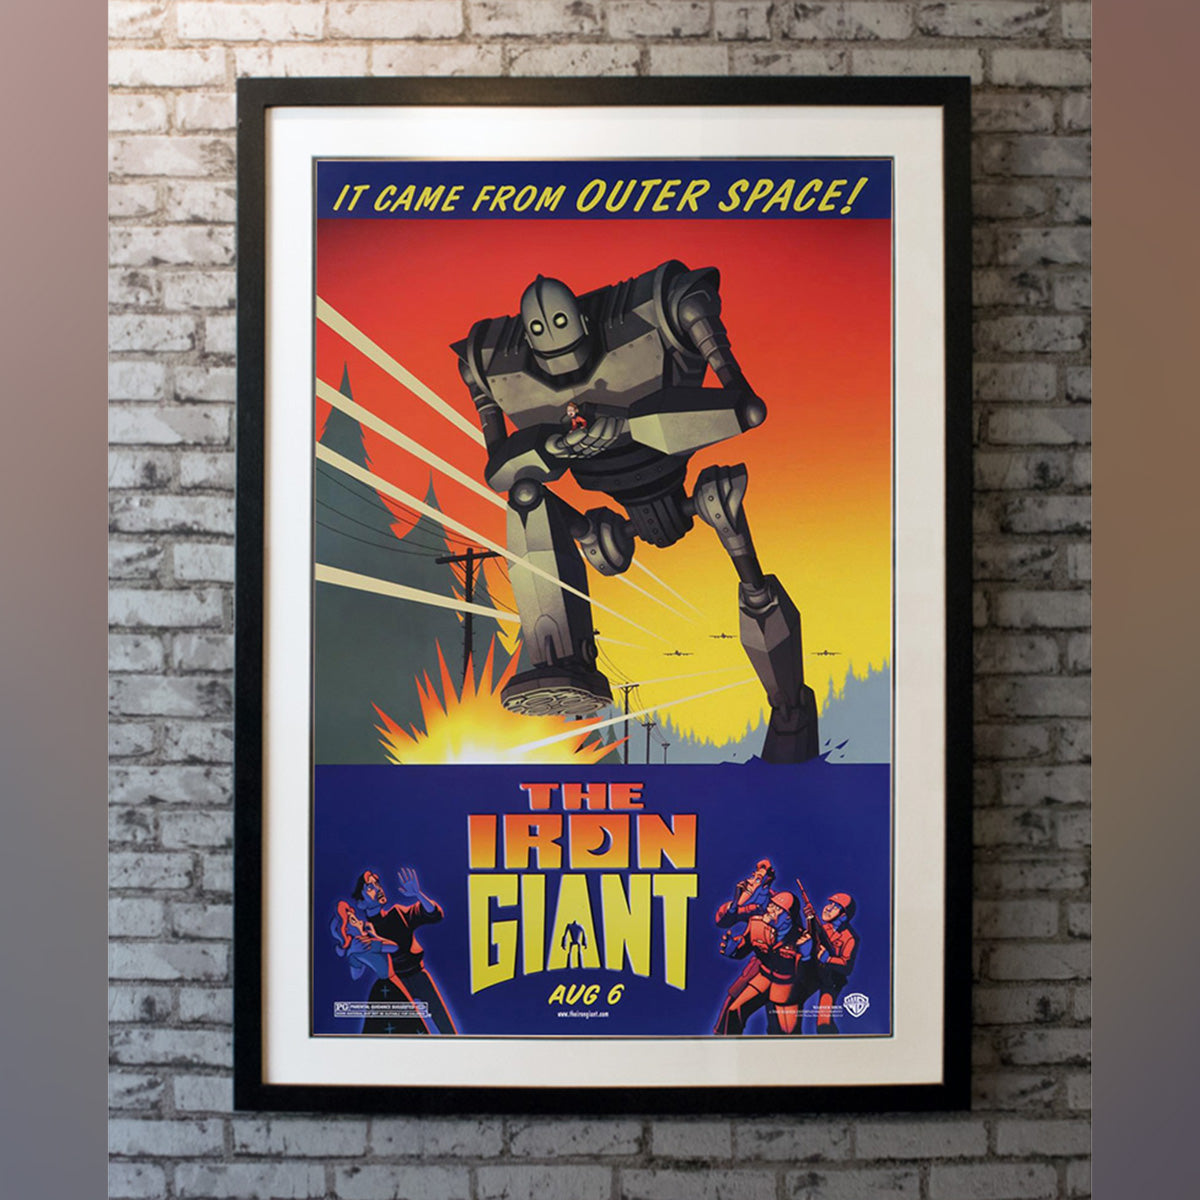 Original Movie Poster of Iron Giant, The (1999)